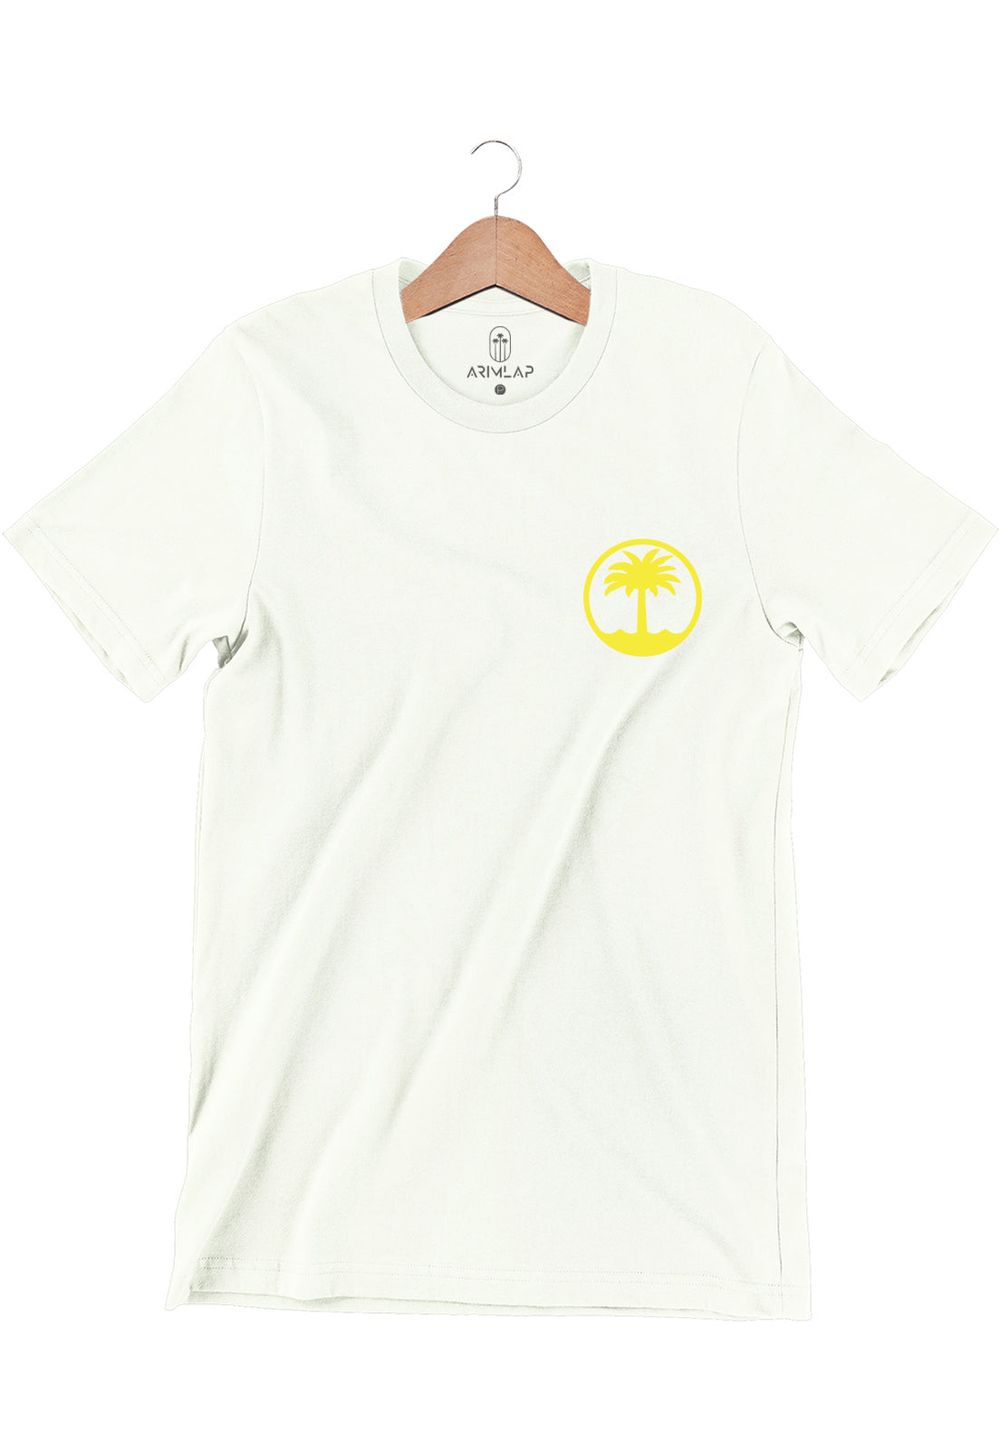 Camiseta Arimlap Paraiso Do Sul Branco Cor:Branco;Tamanho:M;Genero:Masculino